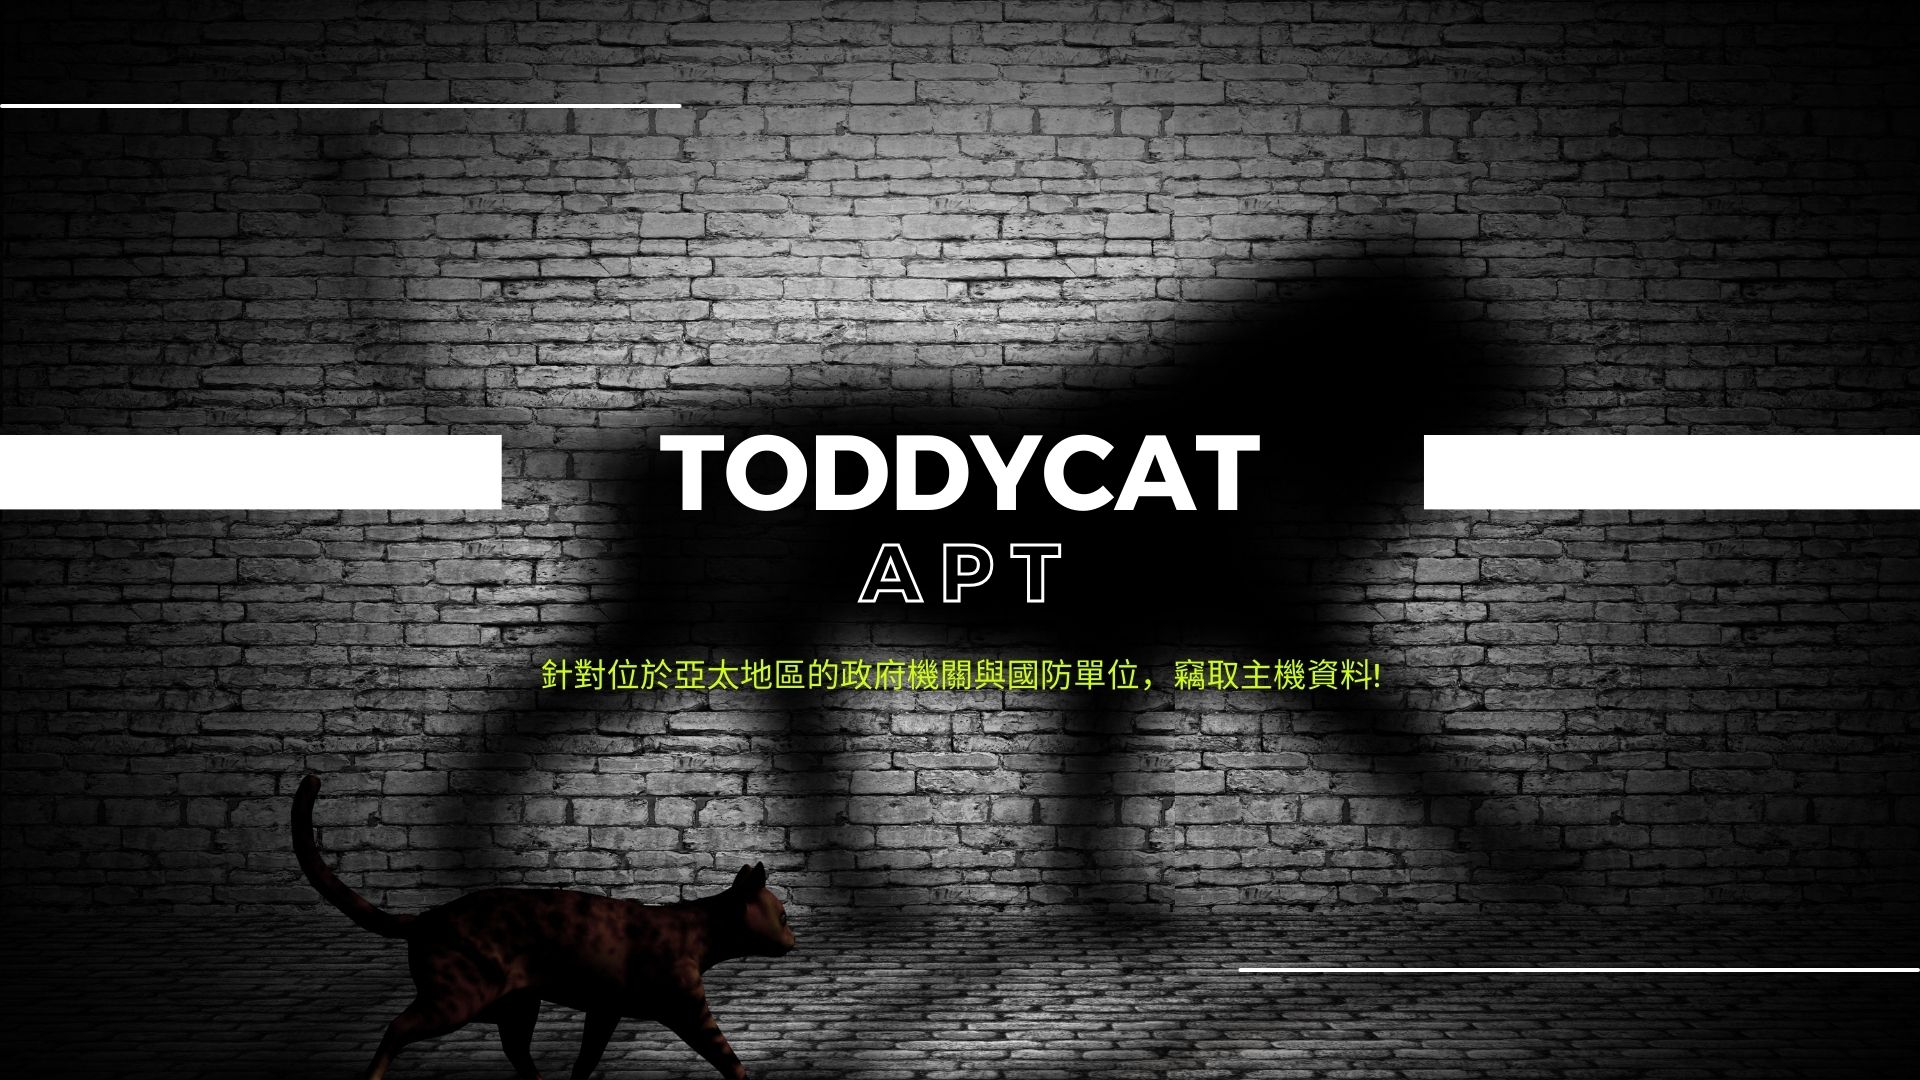 TWCERT/CC 示警APT組織ToddyCat正竊取資料